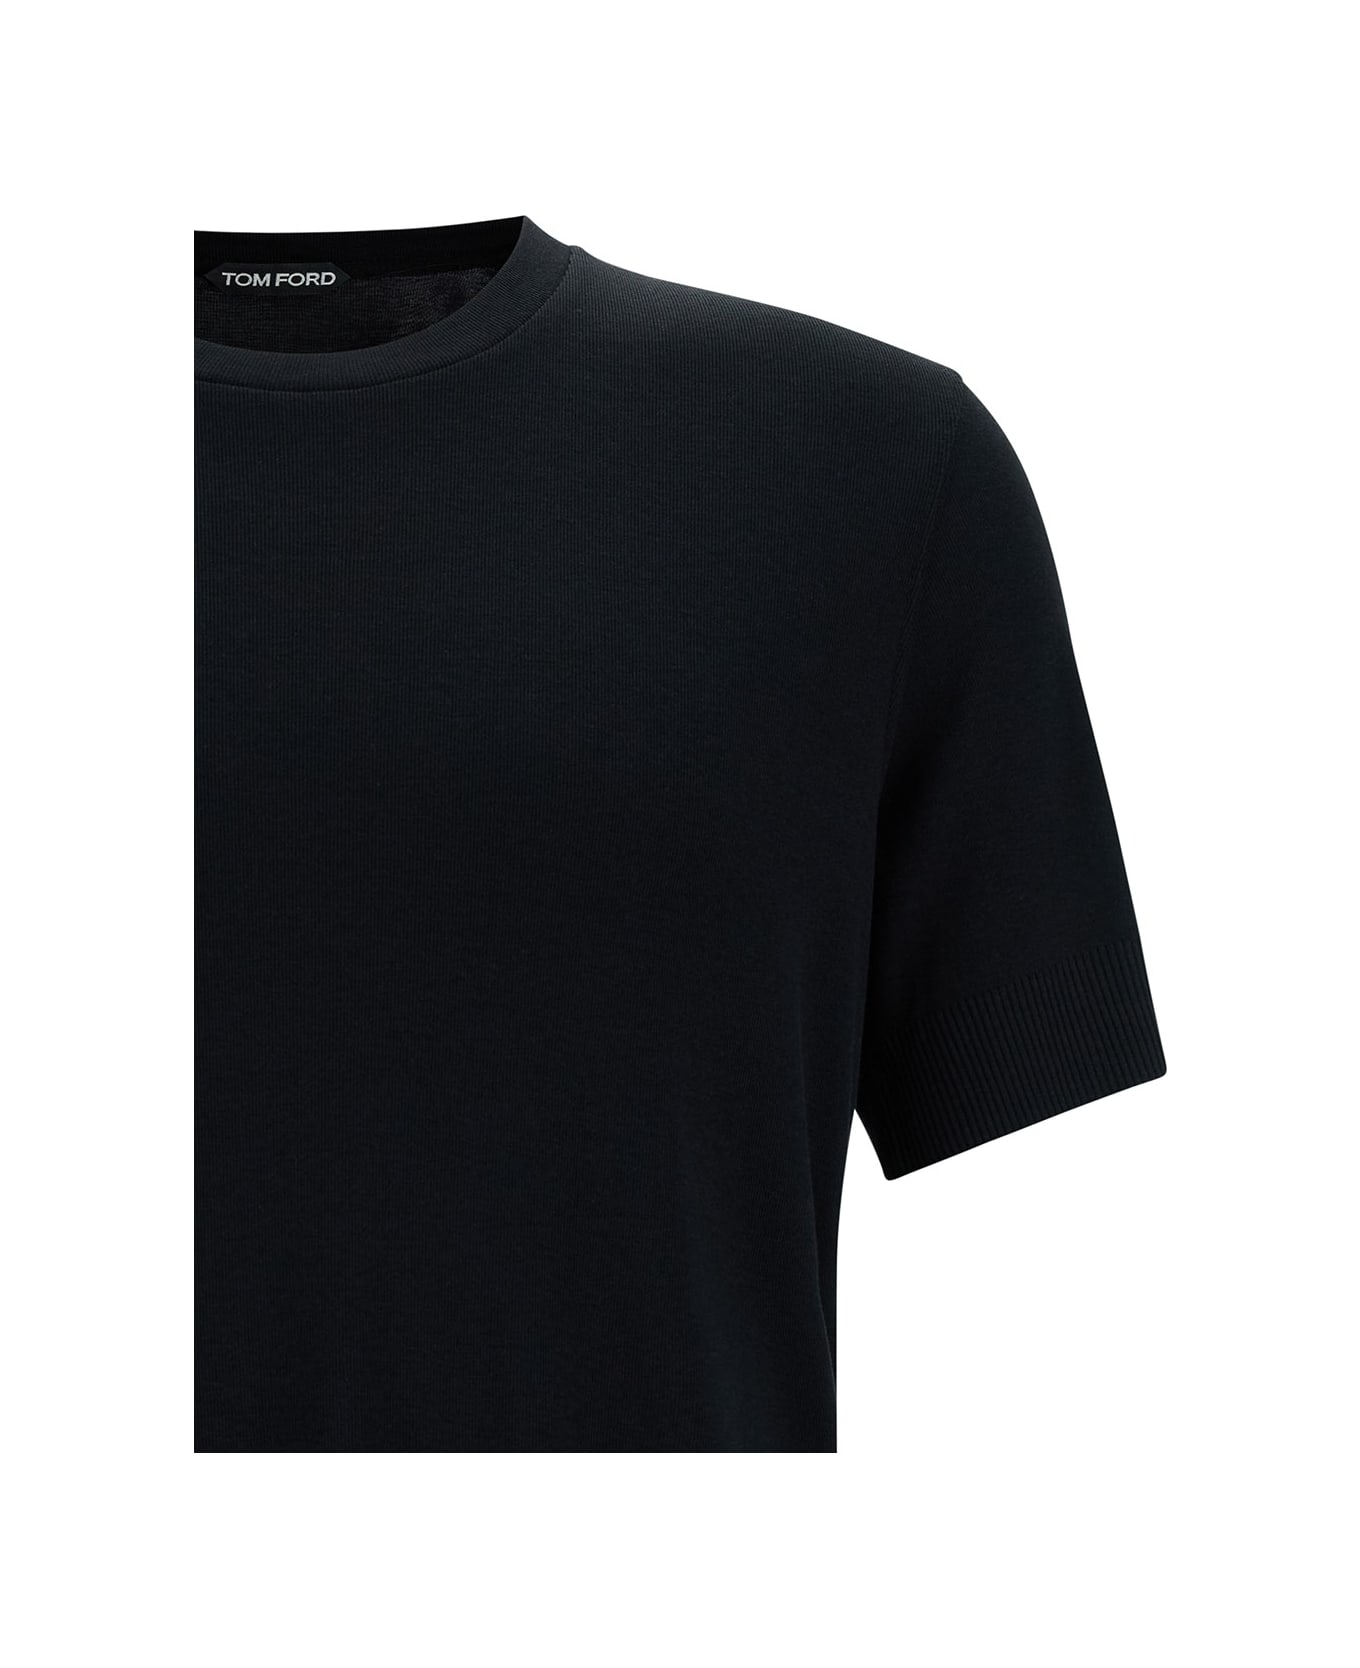 Tom Ford T-shirt Knit - Black